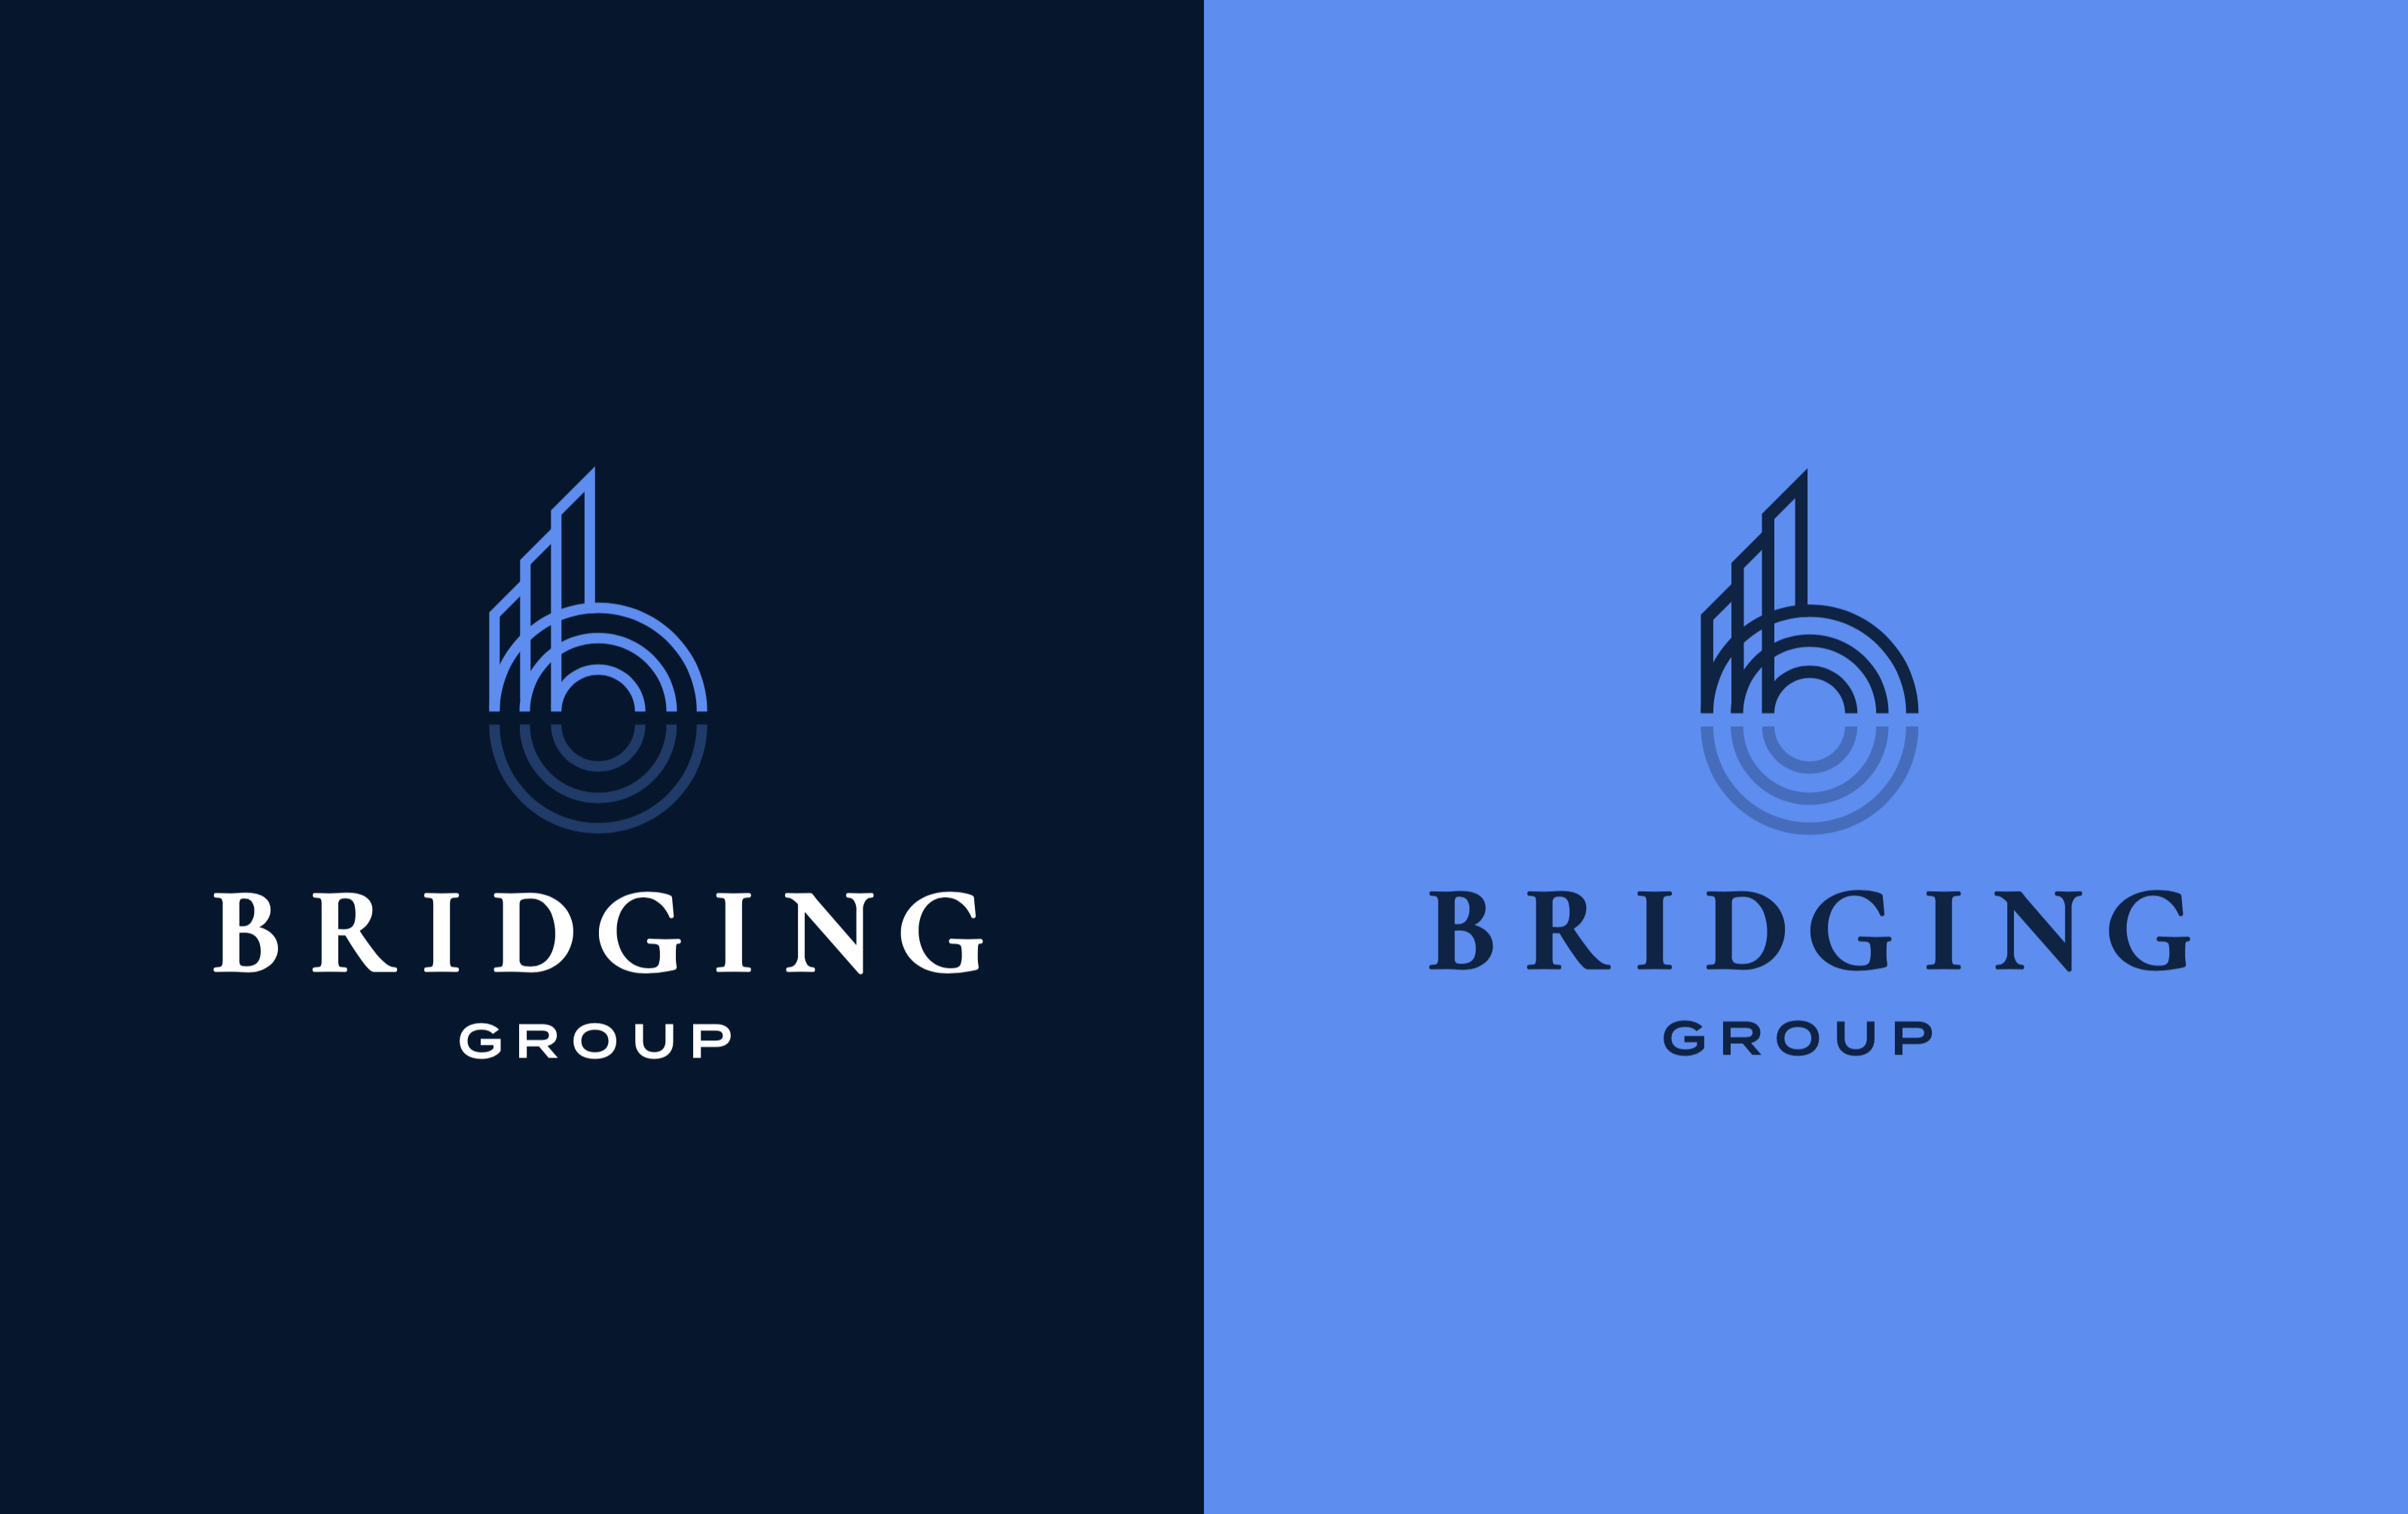 Bridging Group Brand Identity